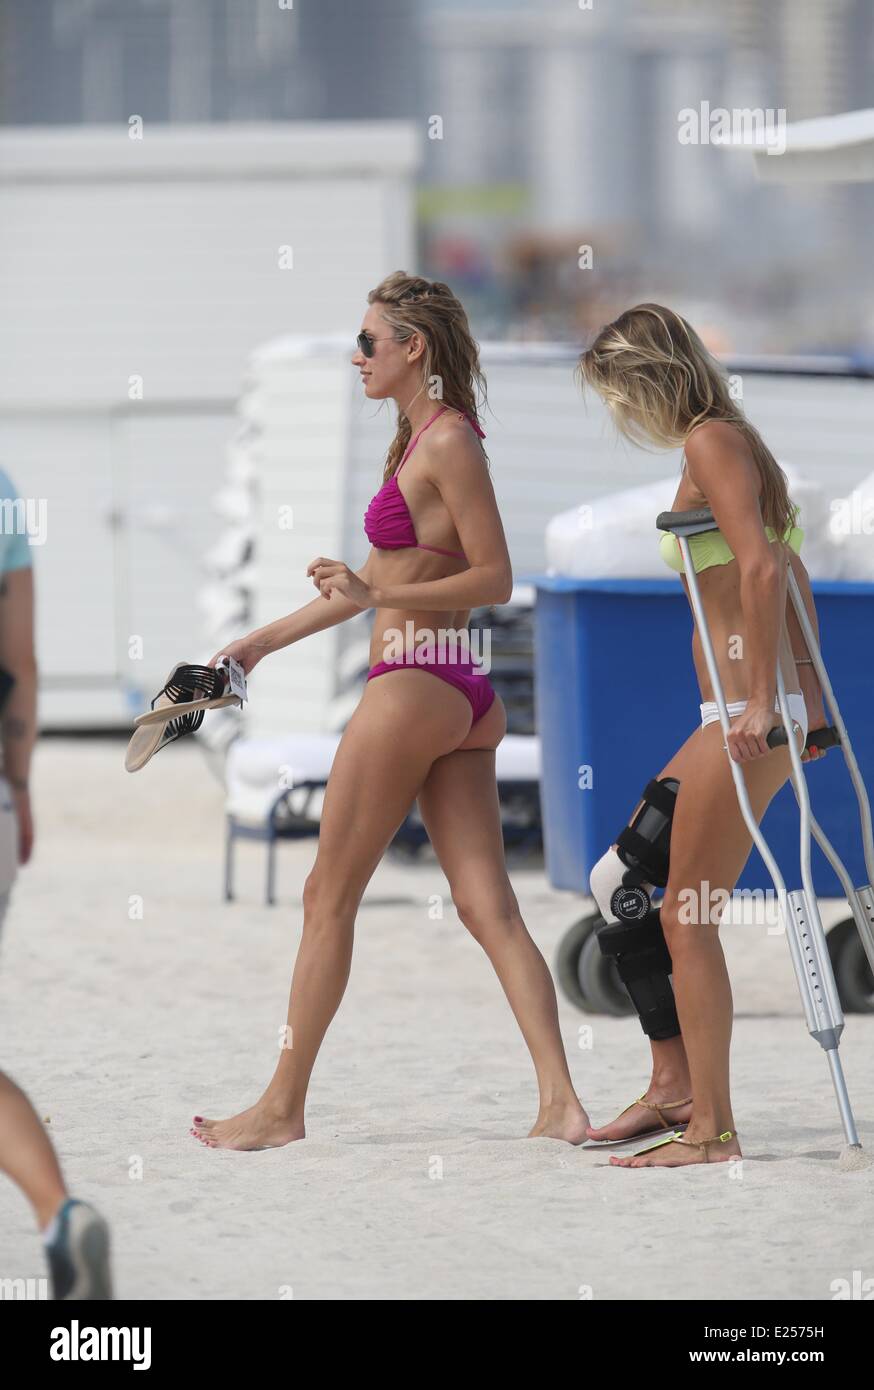 Lauren Stoner enjoys a day on Miami beach in a skimpy purple bikini  Where: Miami, Florida, United States When: 10 Jul 2013 Cred Stock Photo